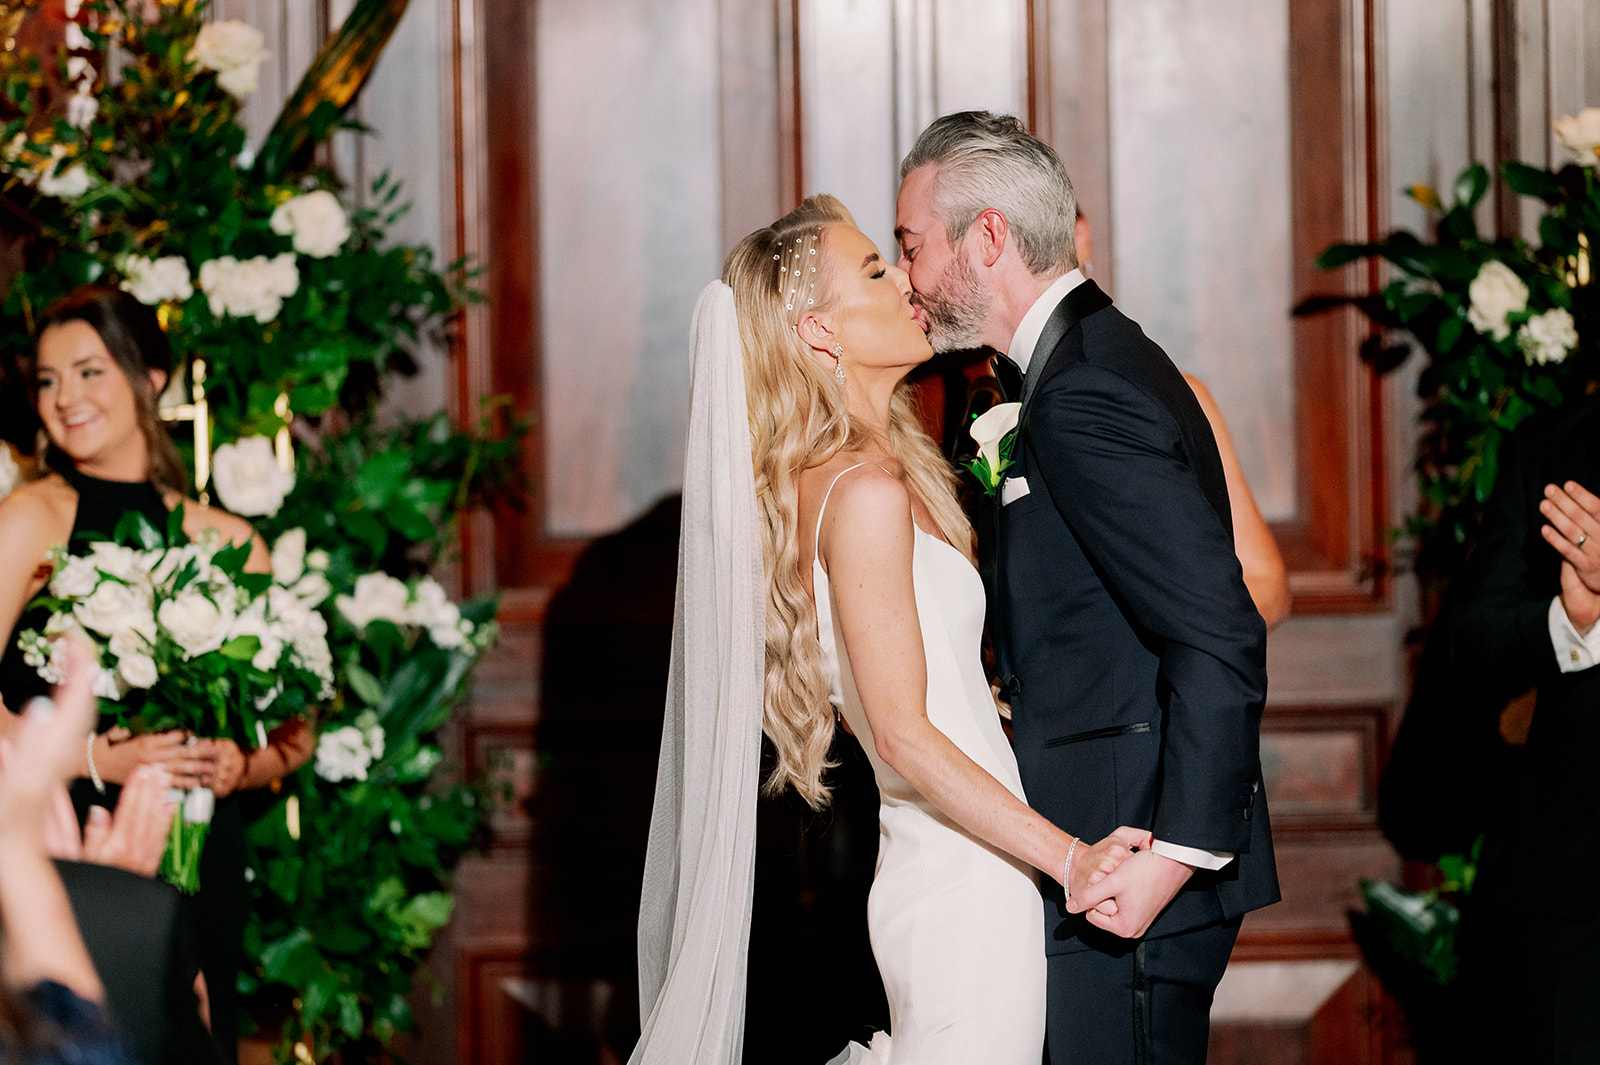 Bourne Mansion indoor wedding ceremony first kiss.